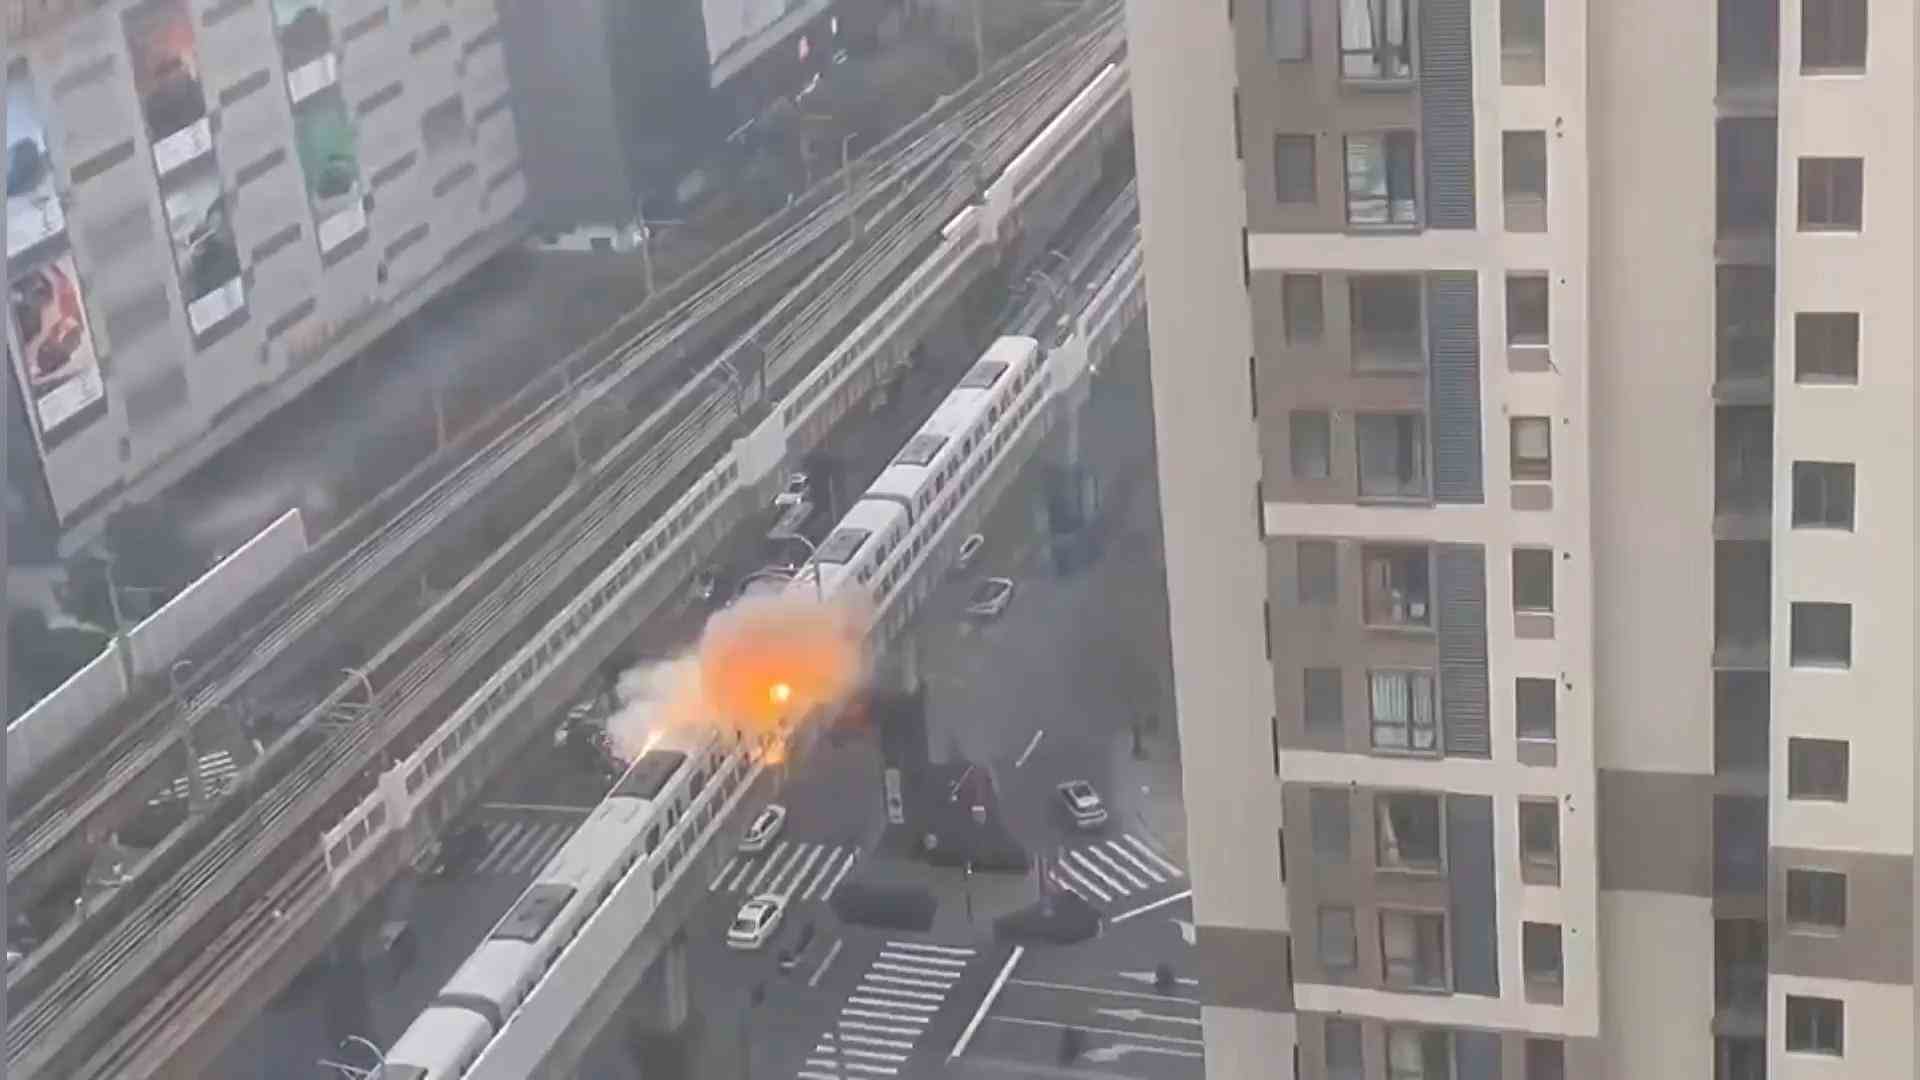 Train explodes in Shanghai: Fireball causes evacuation Power failure is said to be the reason